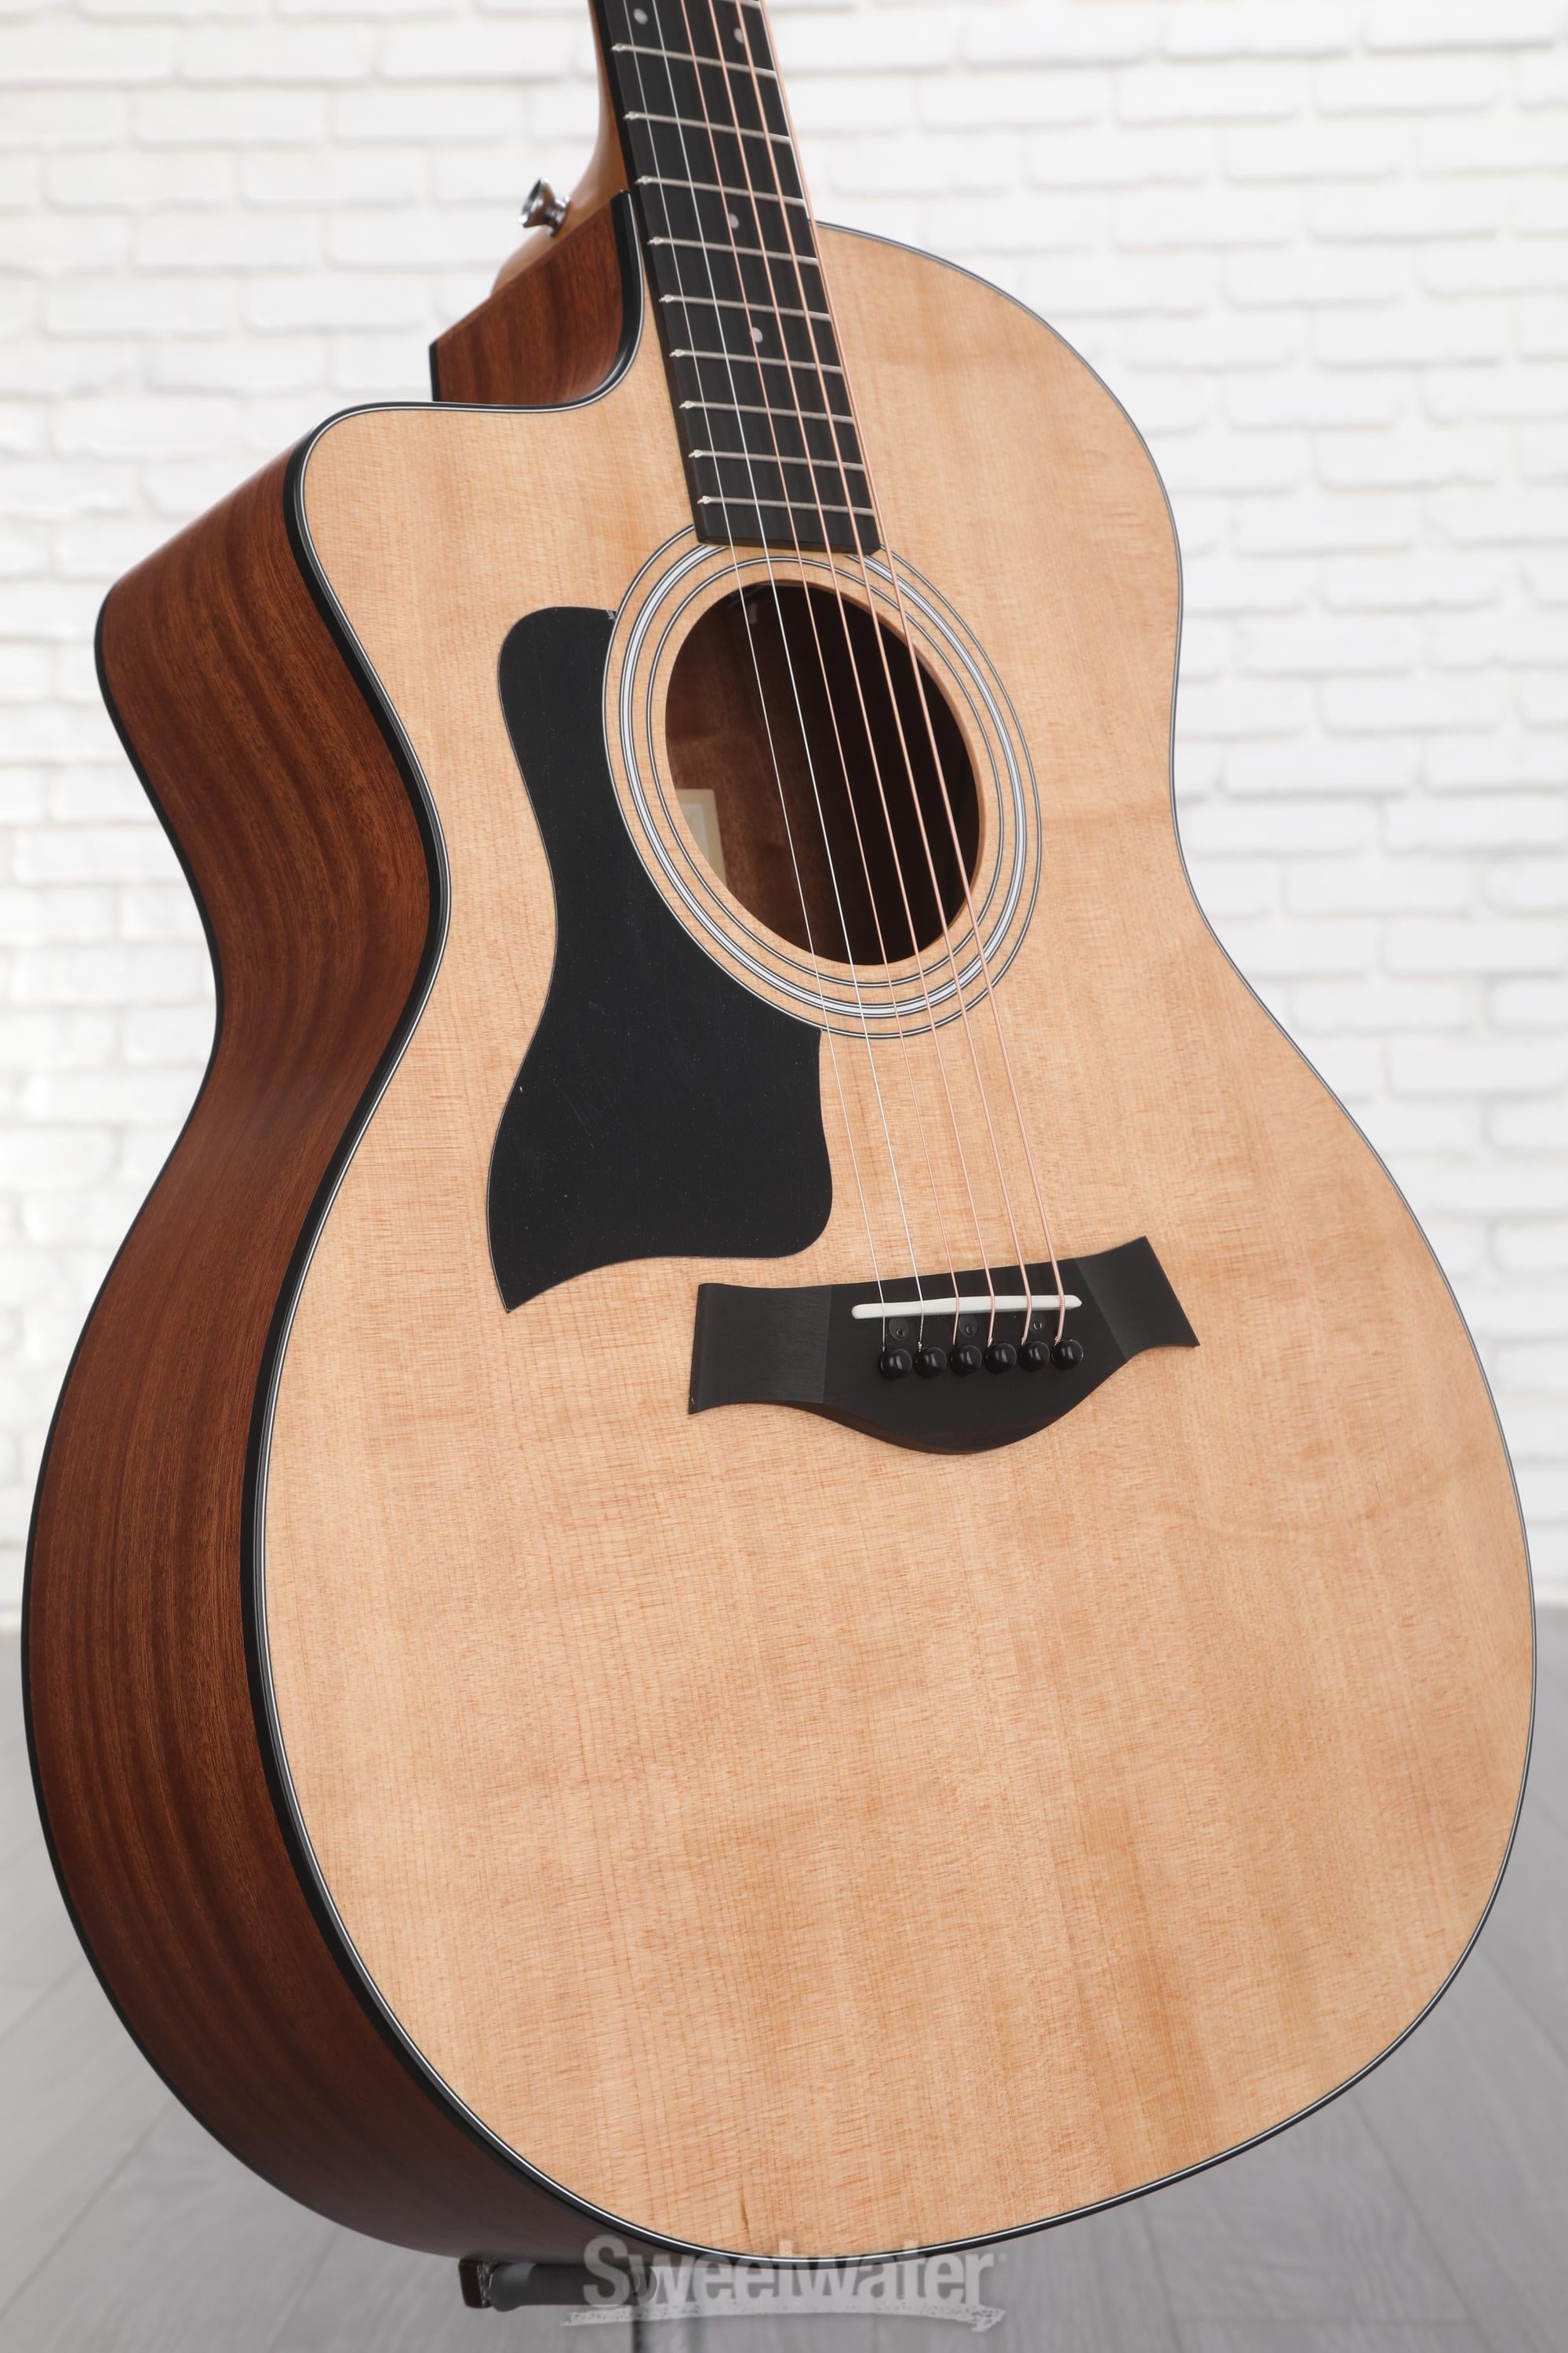 Taylor 114ce Left-handed Acoustic-electric Guitar - Natural Sapele